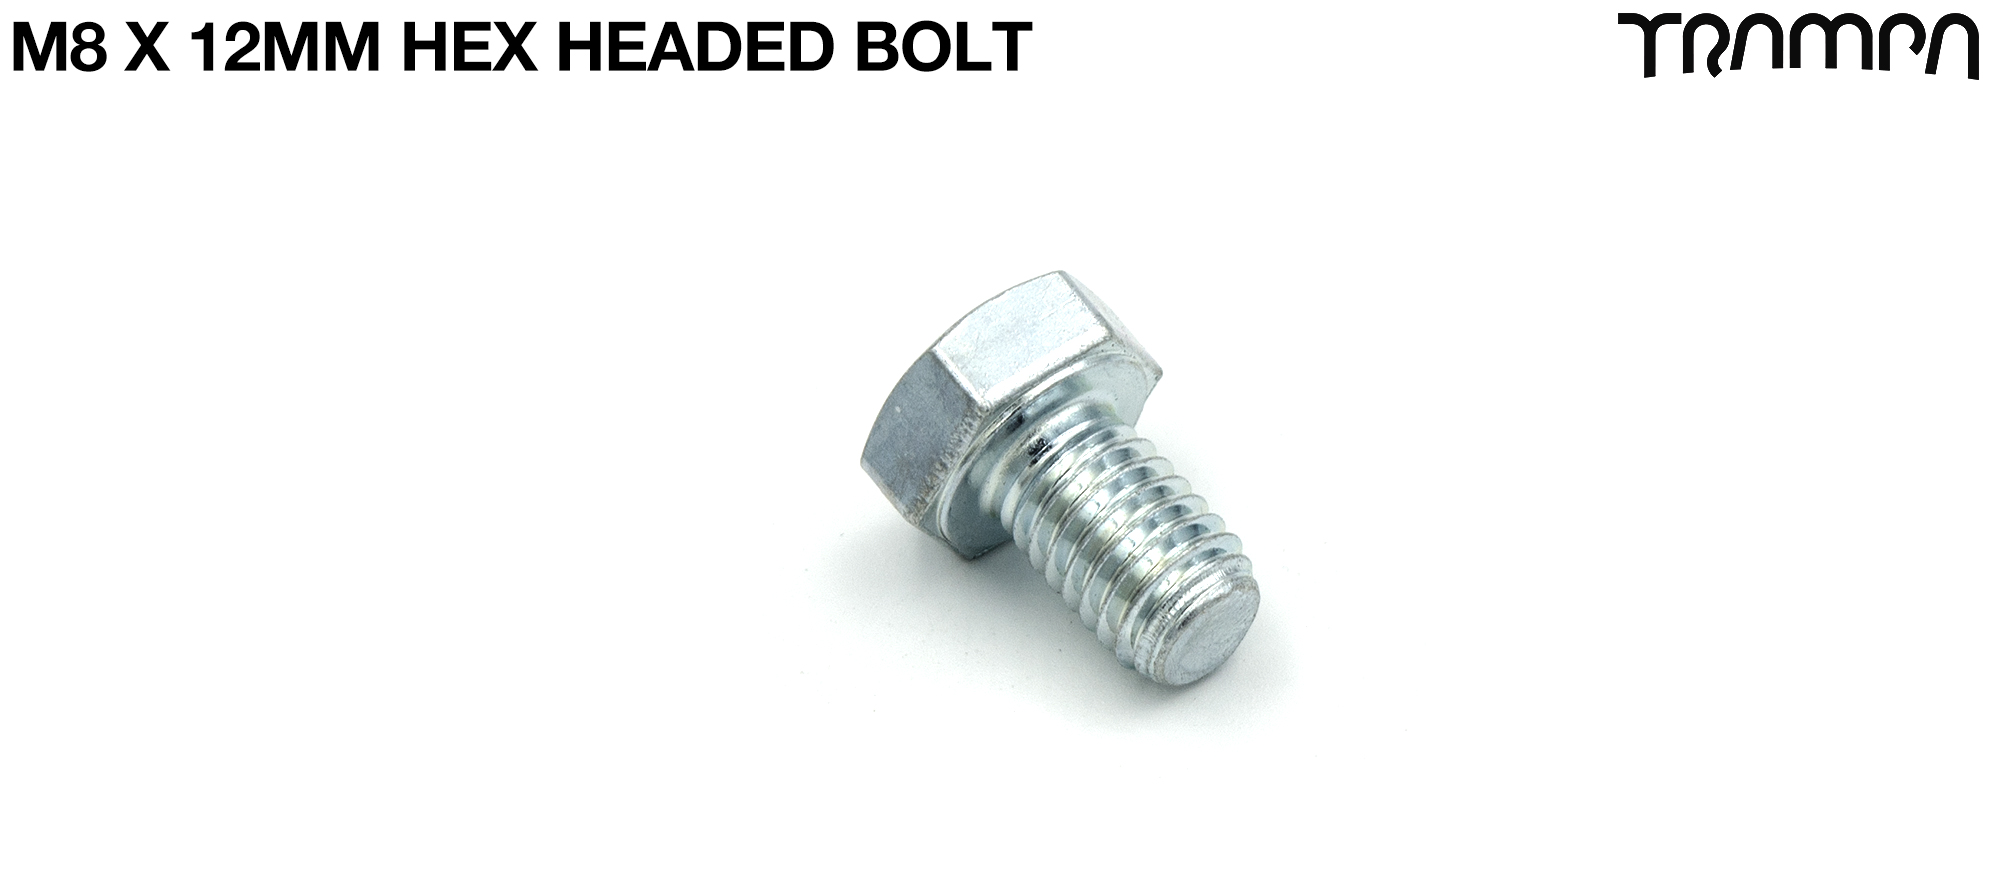 M8 x 12mm Hex Head Bolt - High Tensile 8.8 Bright Zinc Plated 